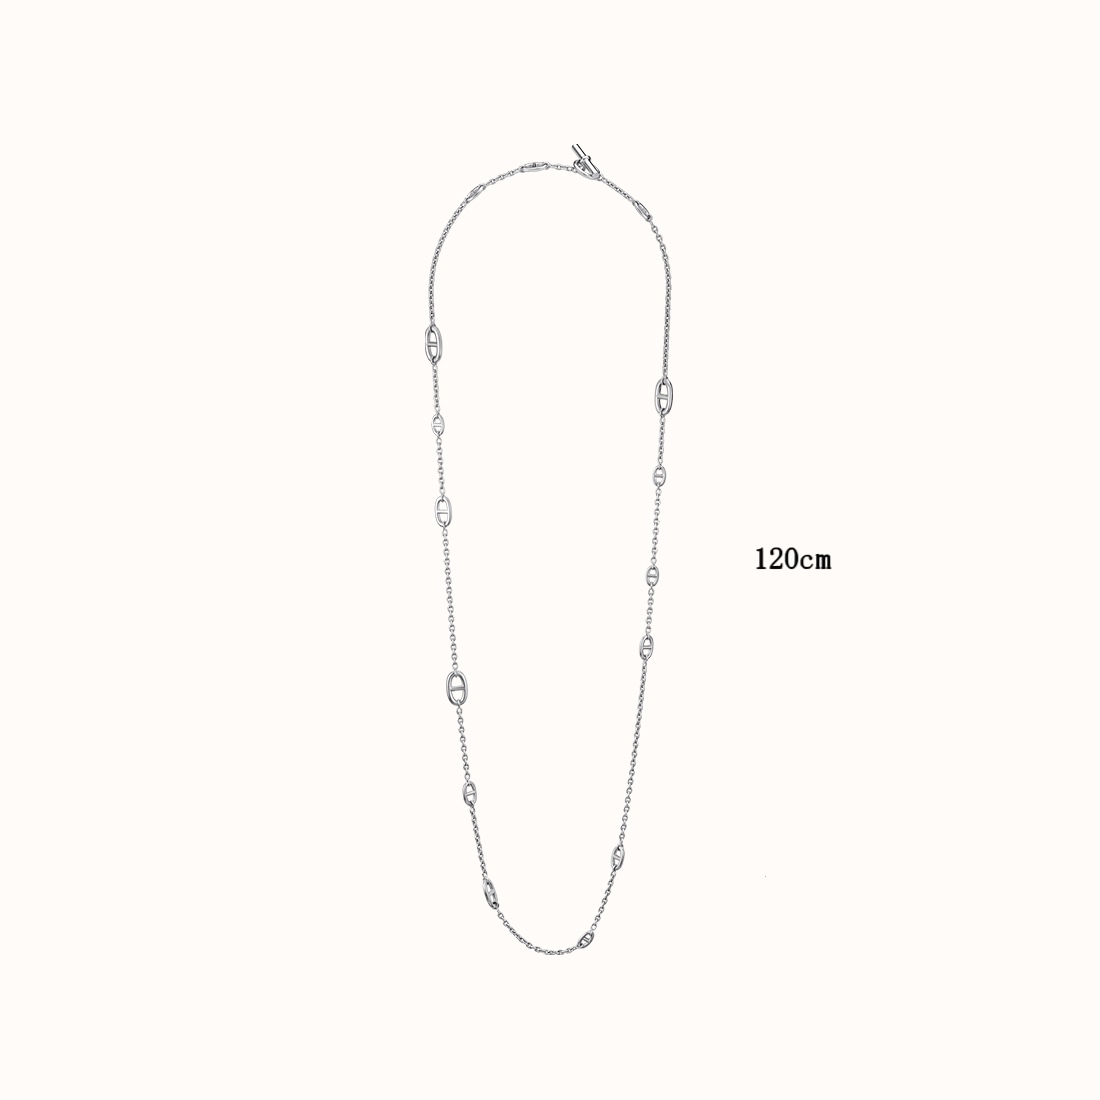 Hermes Jewelry Necklaces & Pendants Waist Chain Unisex